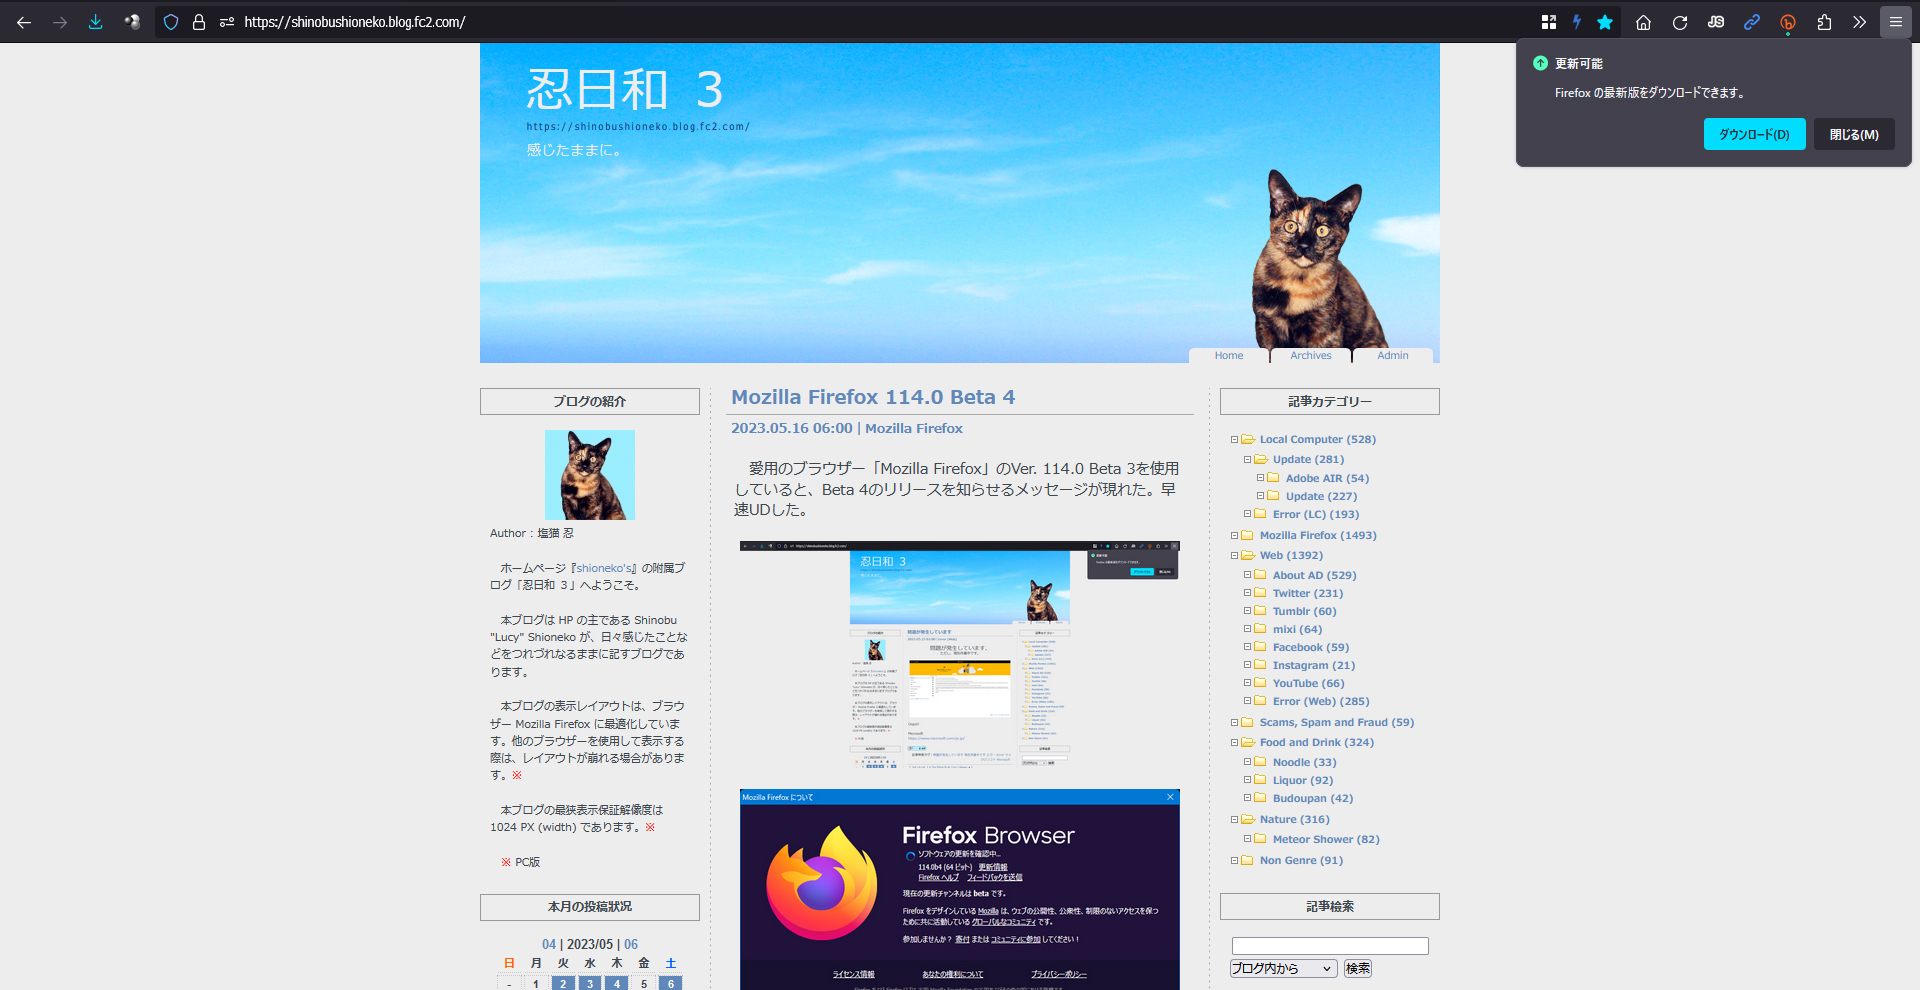 Mozilla Firefox 114.0 Beta 5